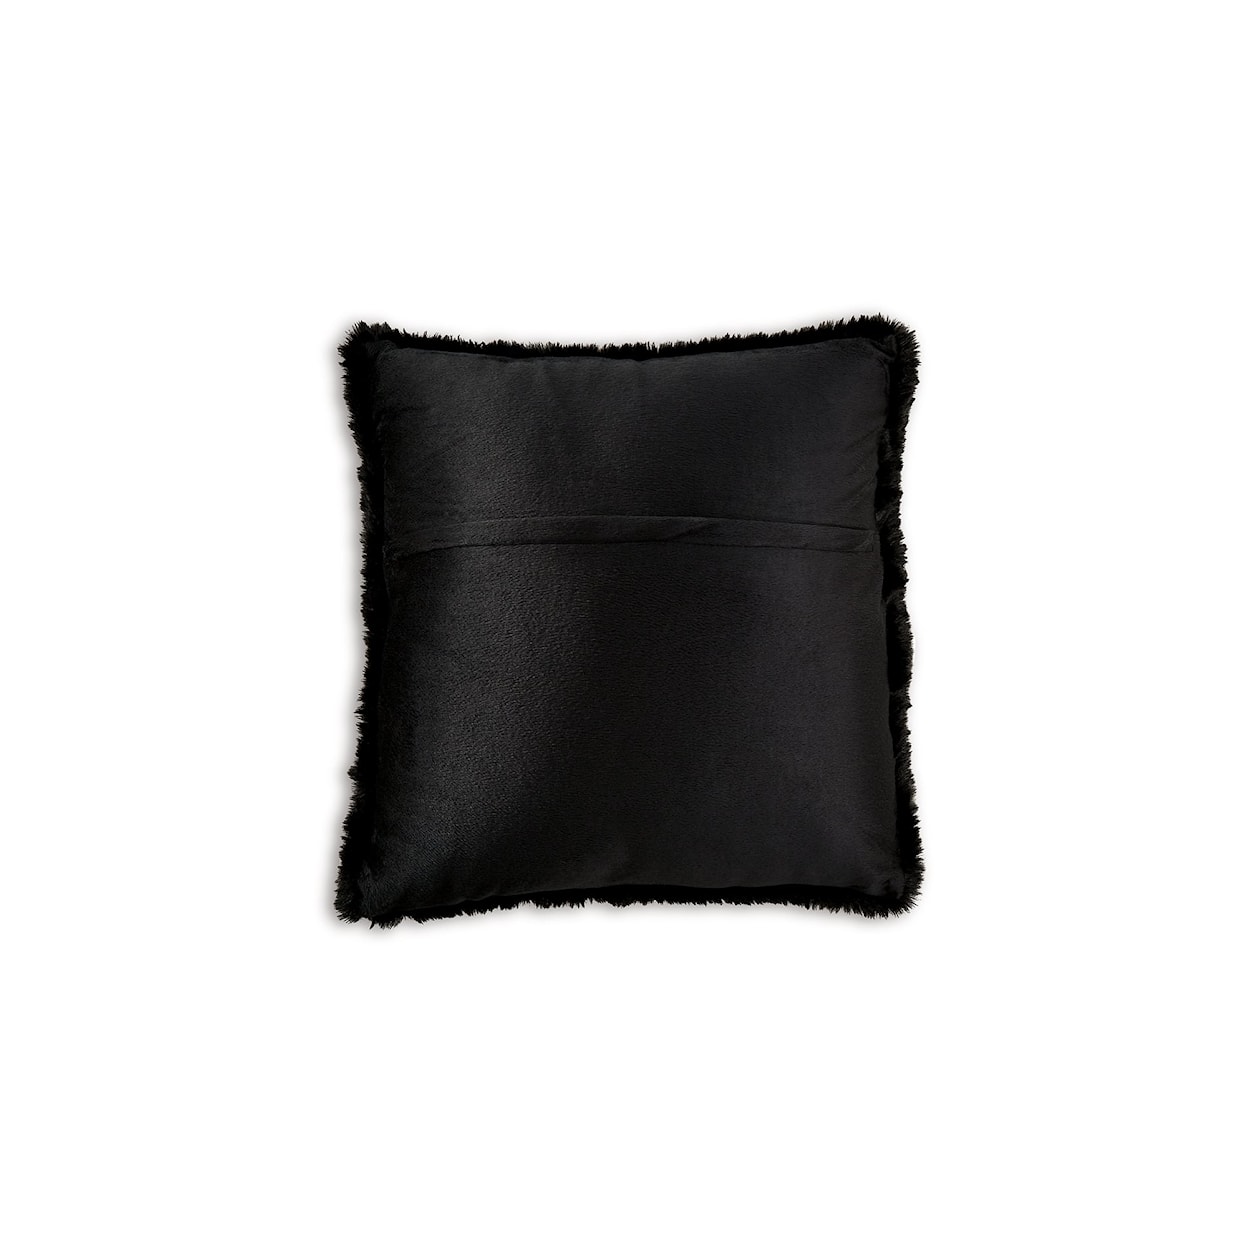 Signature Design Gariland Pillow (Set of 4)